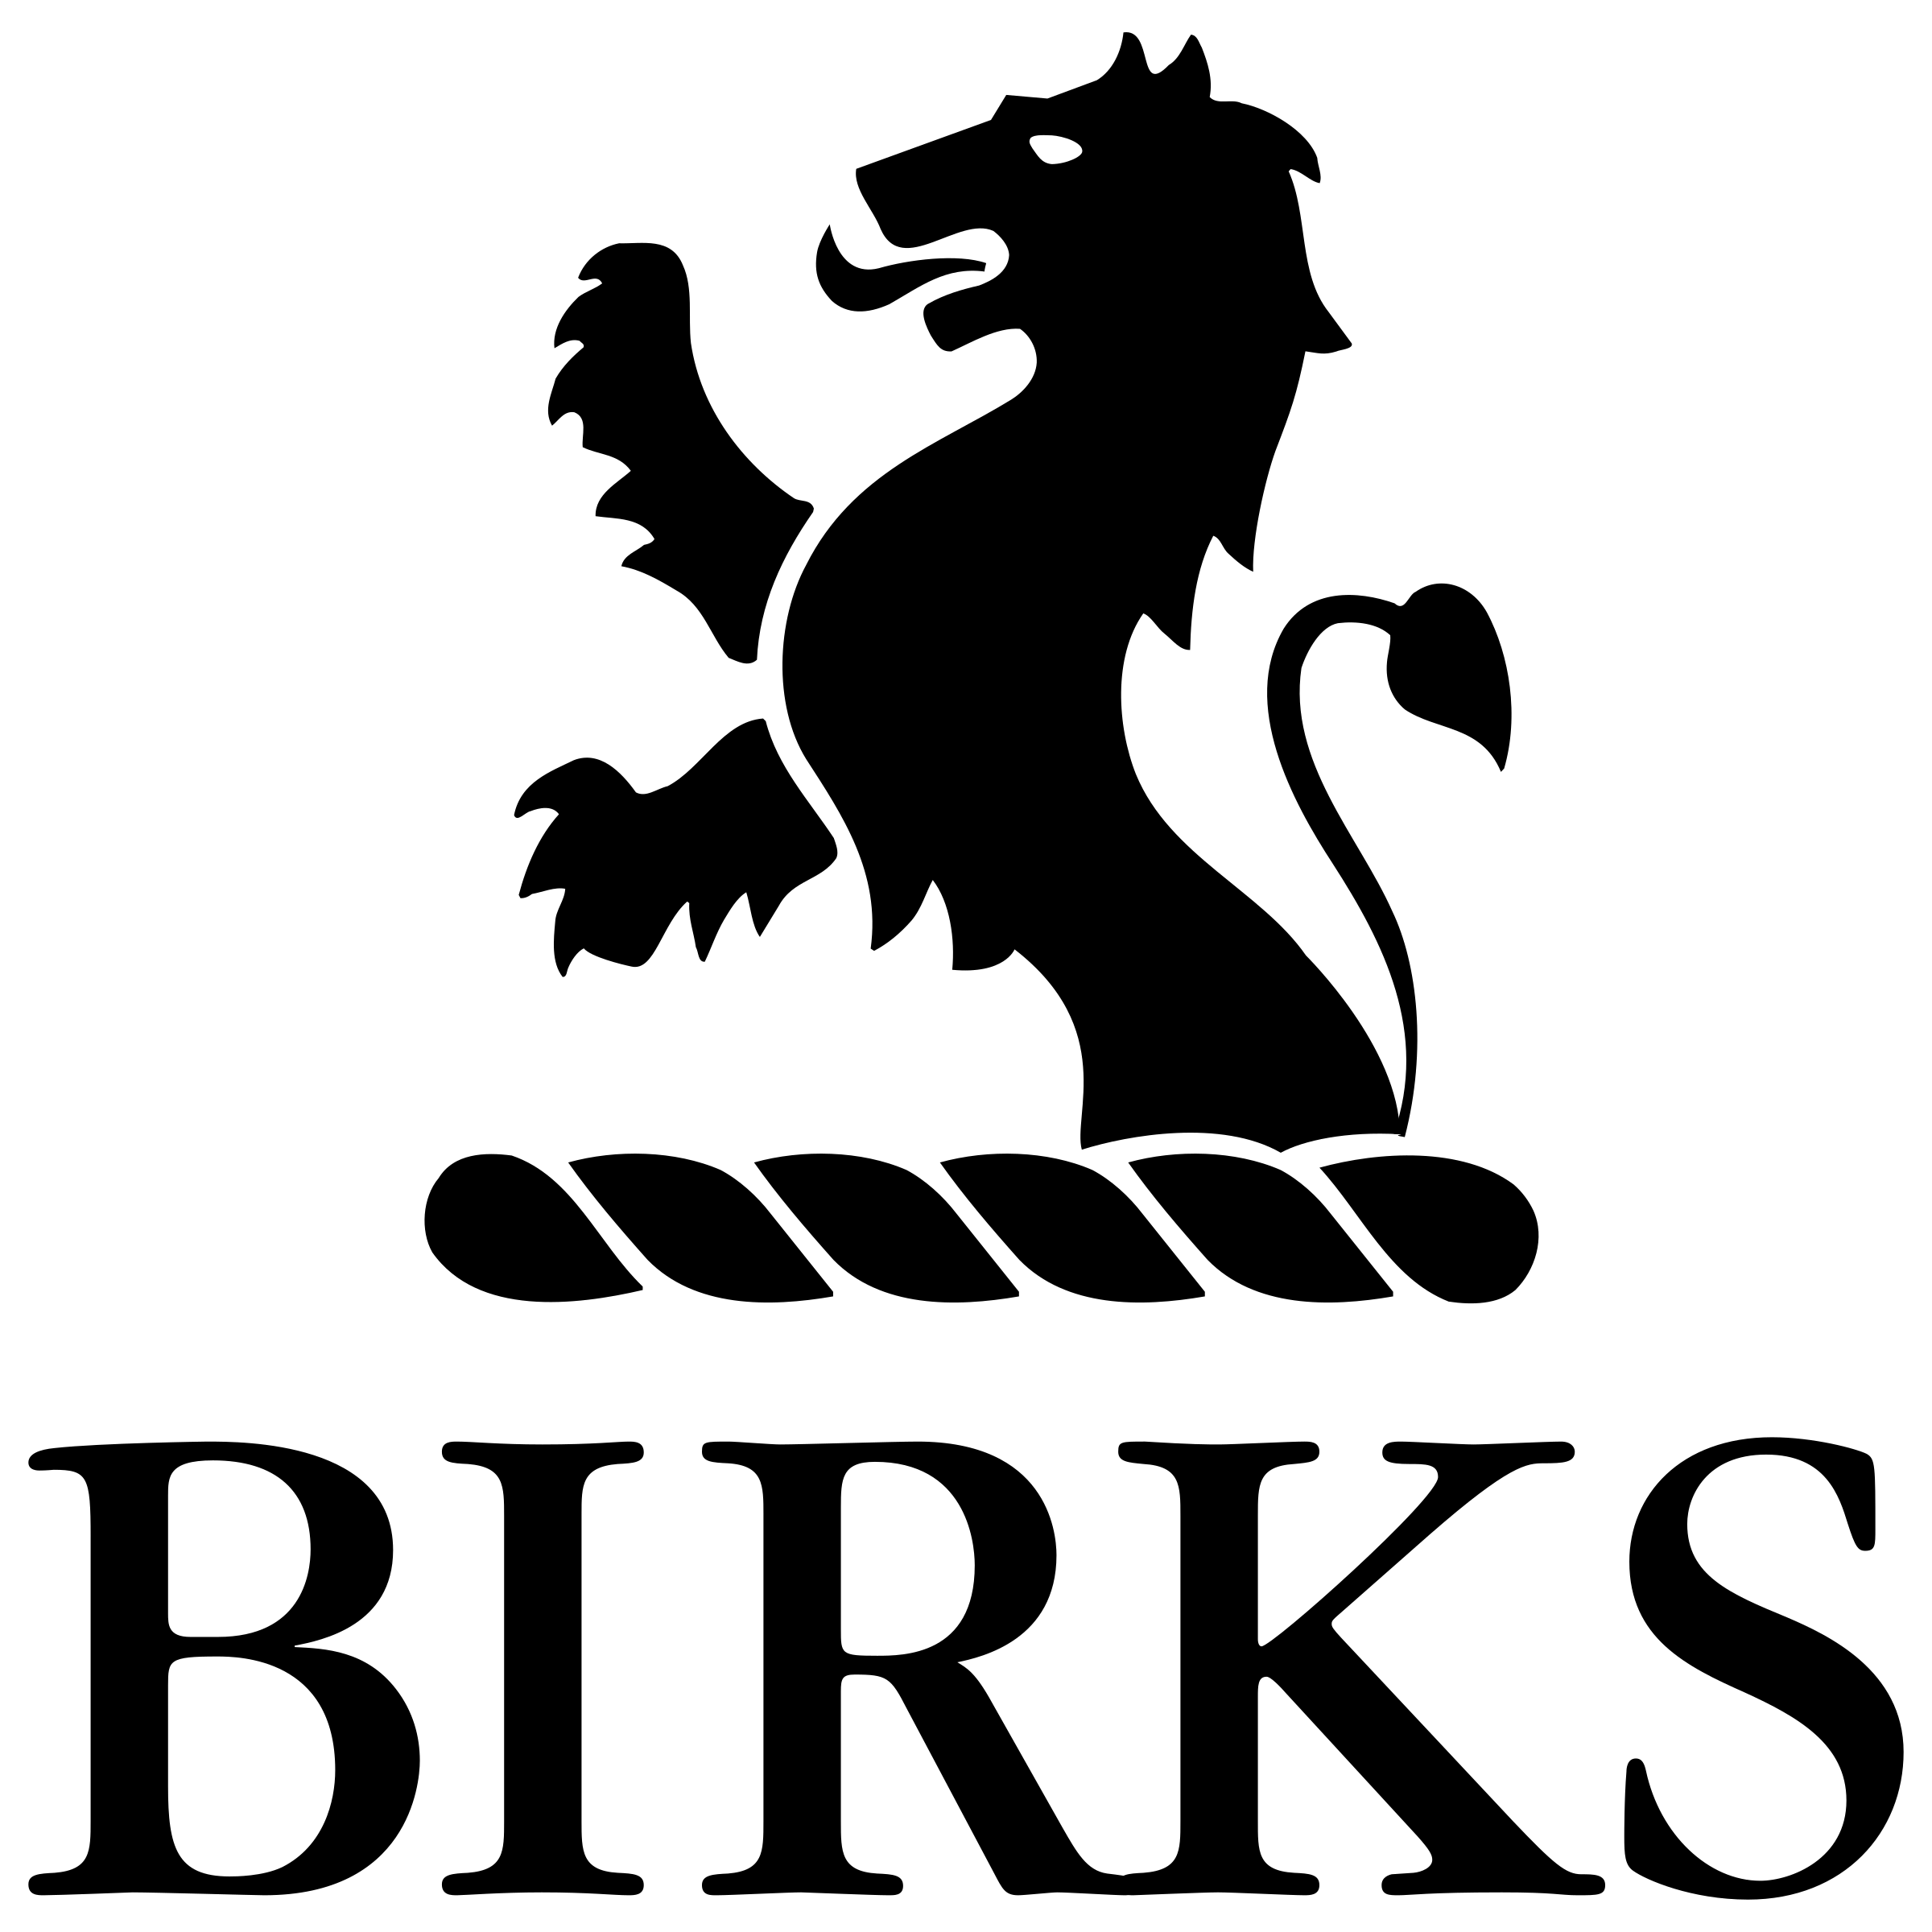 birks-logo-black-and-white